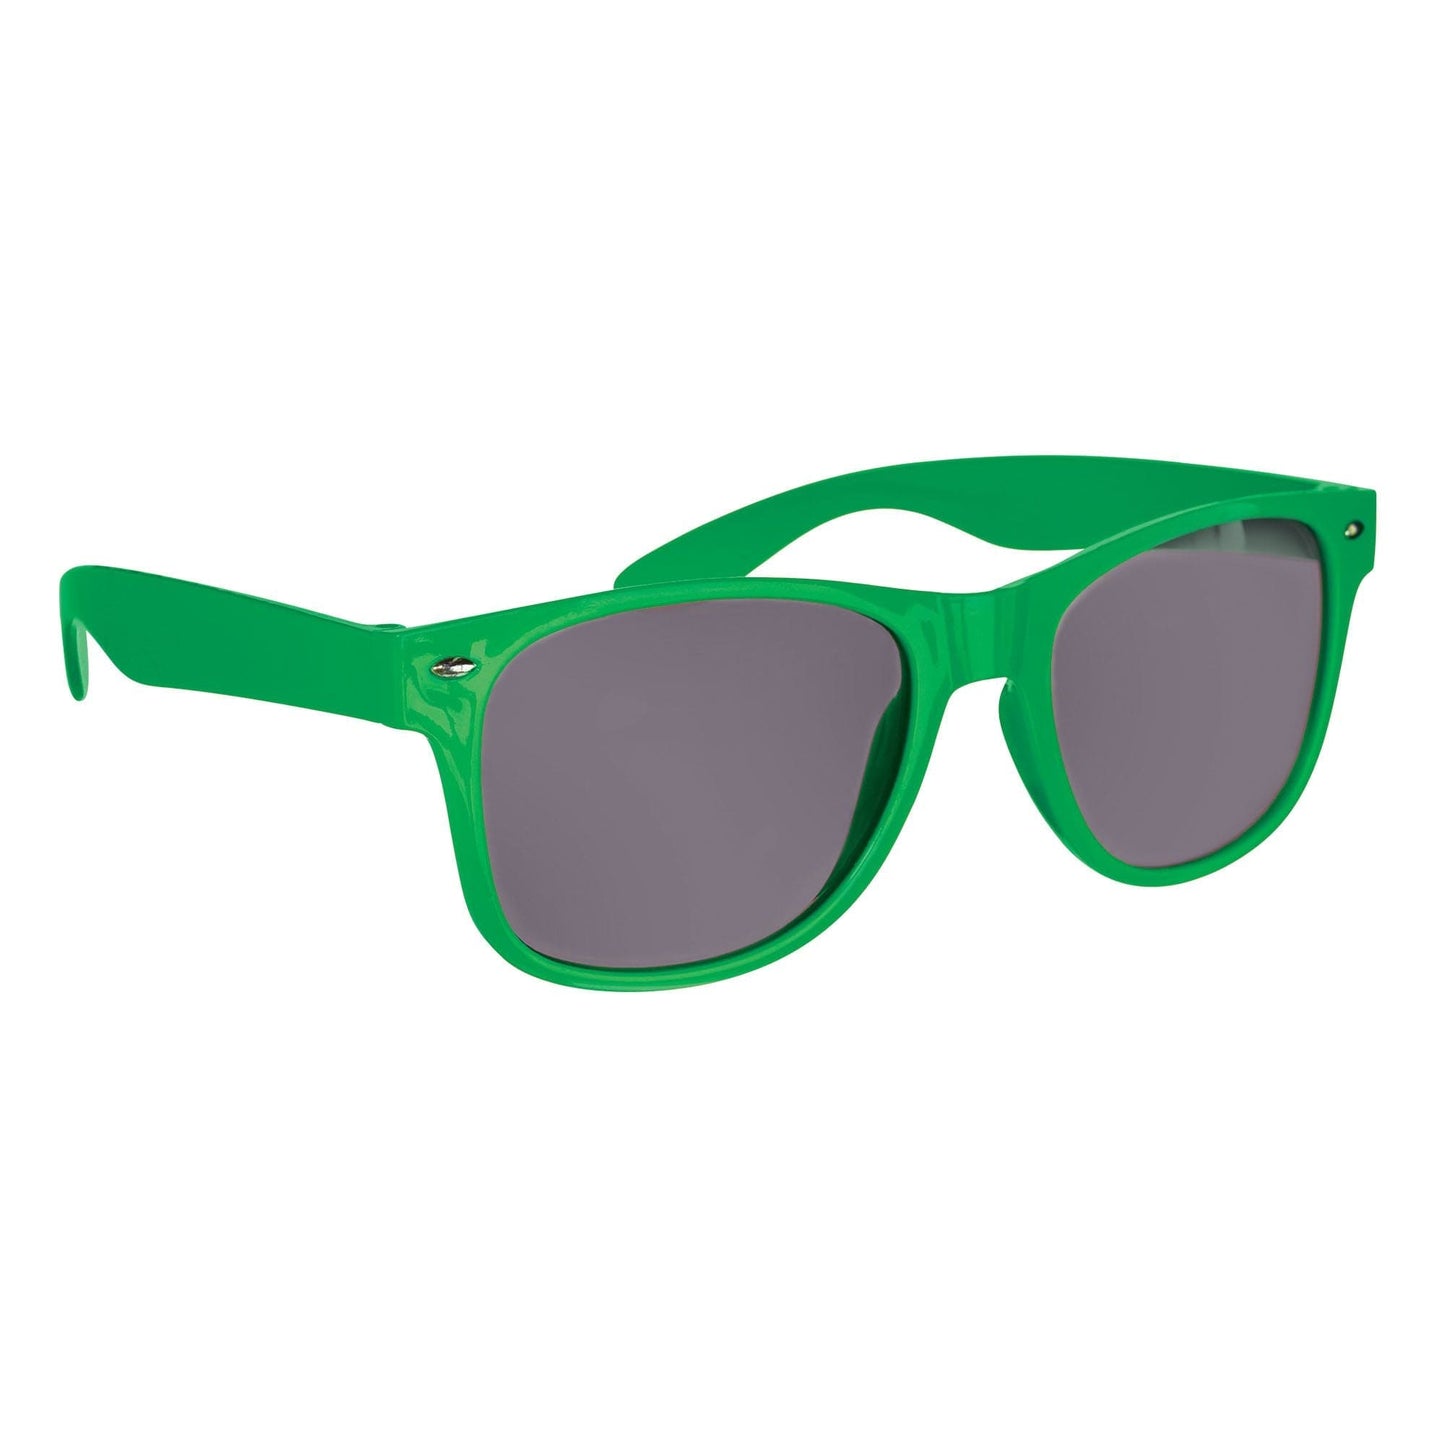 Glasses Darl Lens - Green